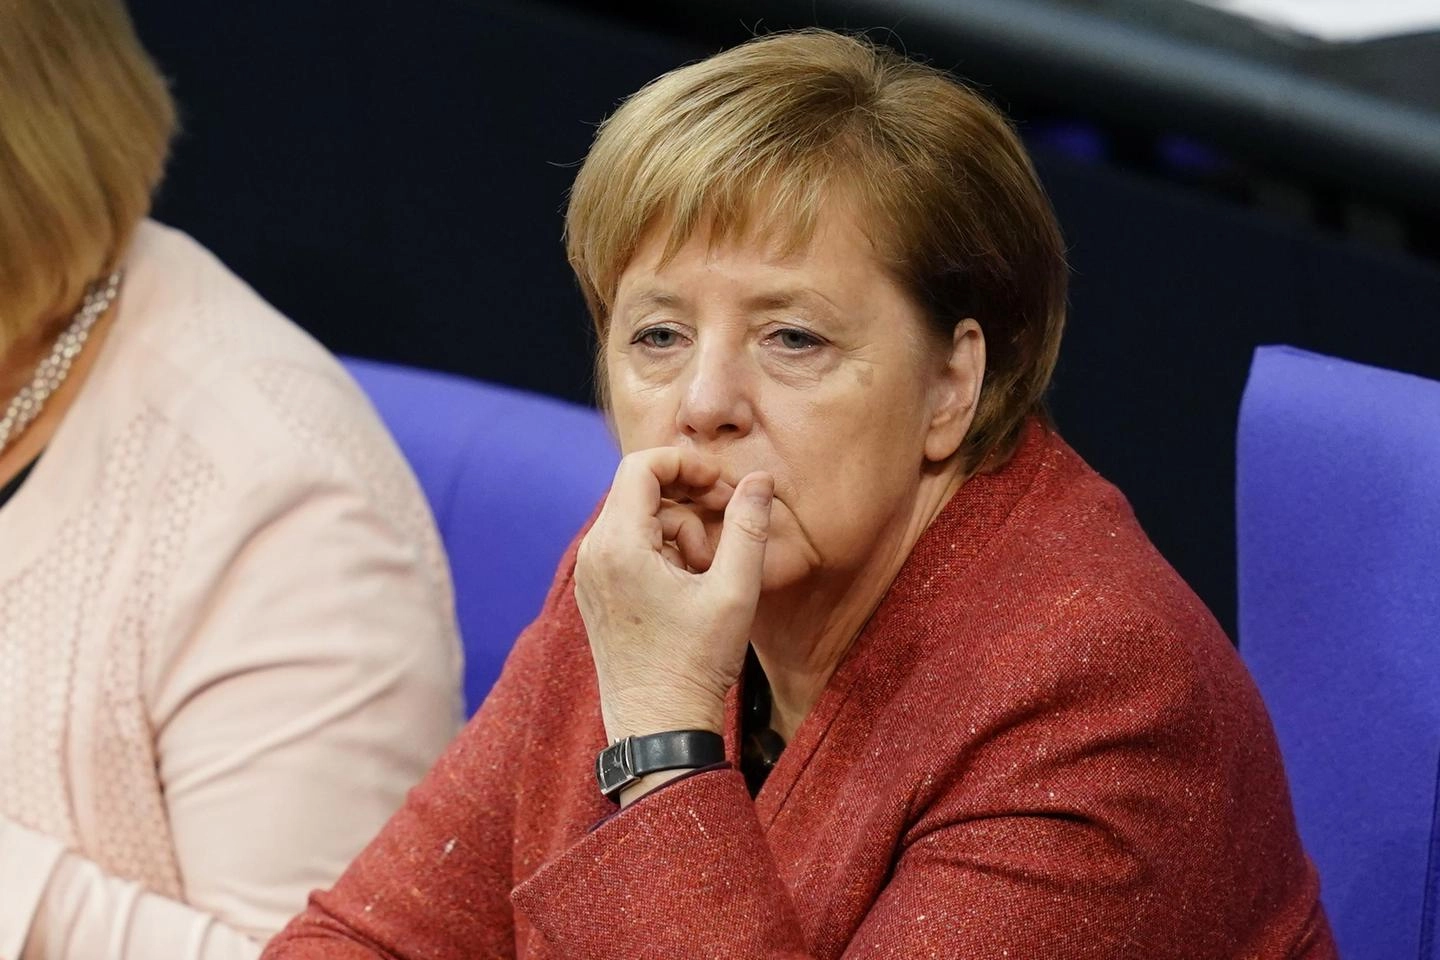  Angela Merkel (Ansa)